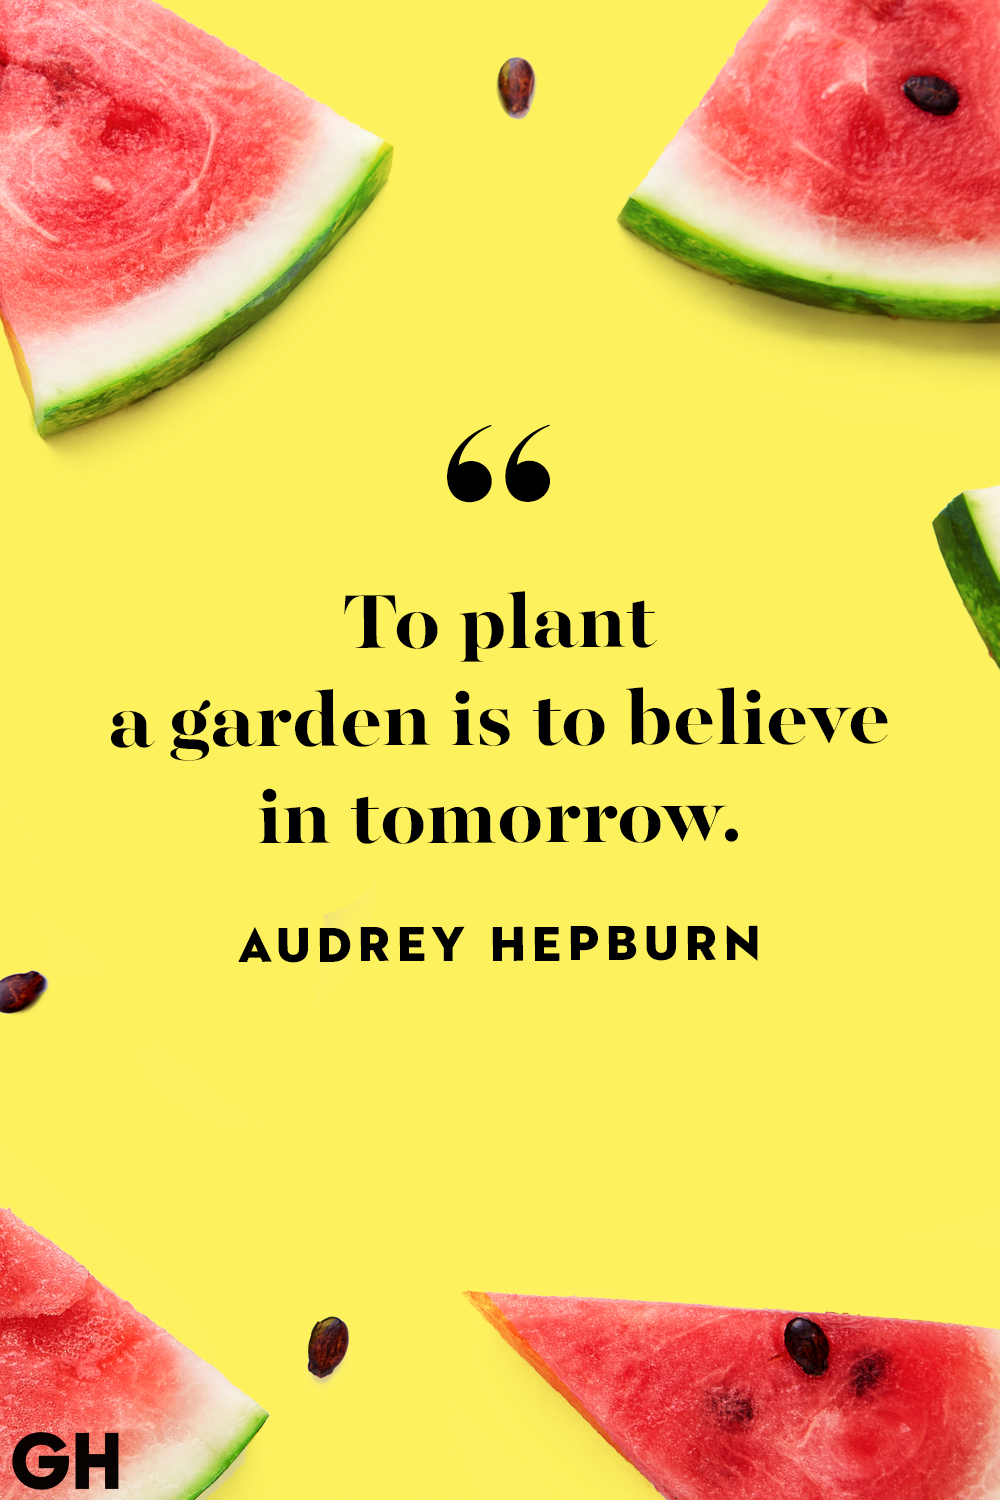 summer garden quotes